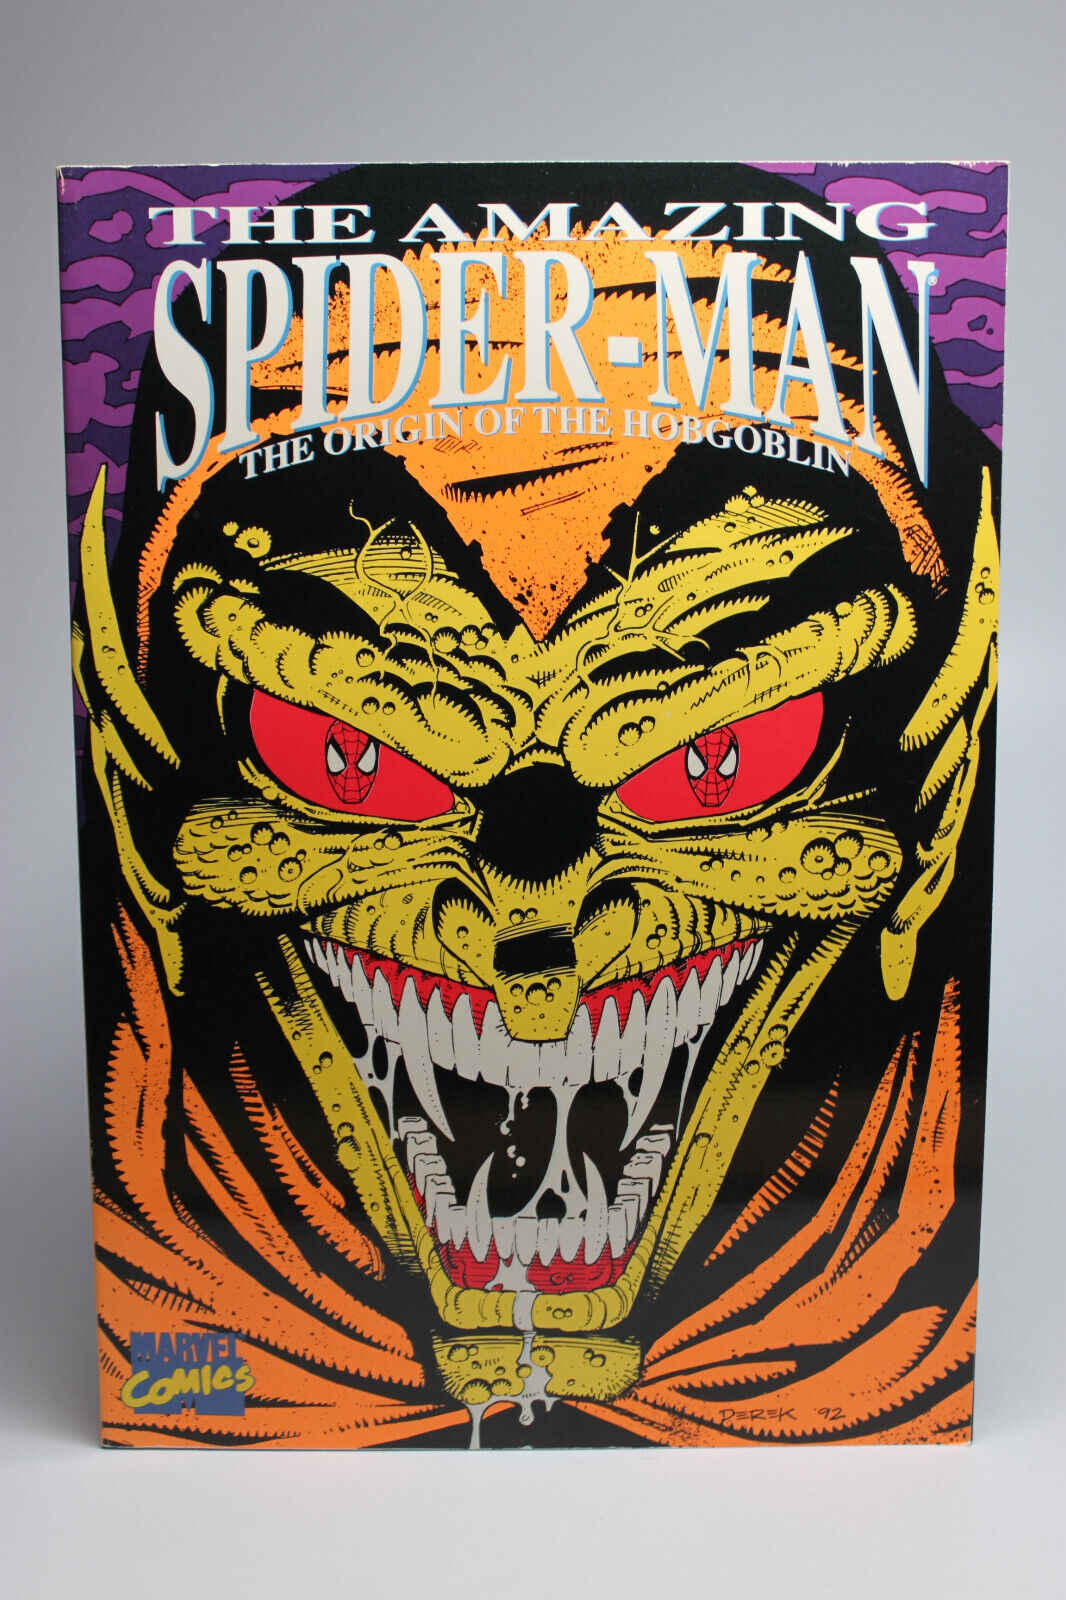 The Amazing Spider-Man: The Origin of the Hobgoblin (Marvel Comics 1993)